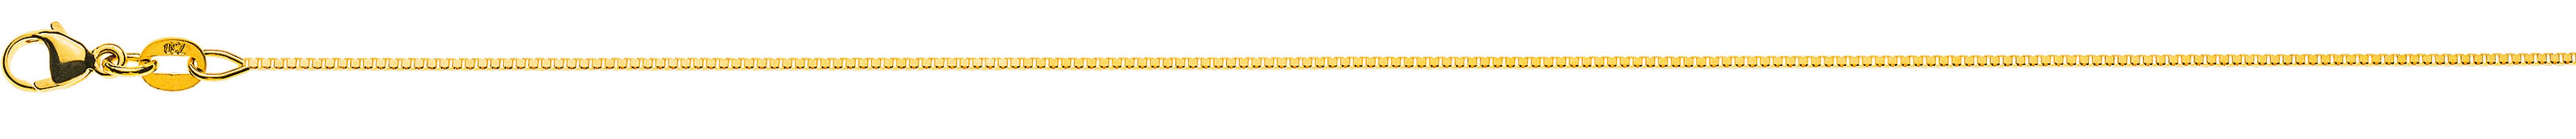 AURONOS Prestige Necklace yellow gold 18K Venetian chain diamond 36cm 0.8mm